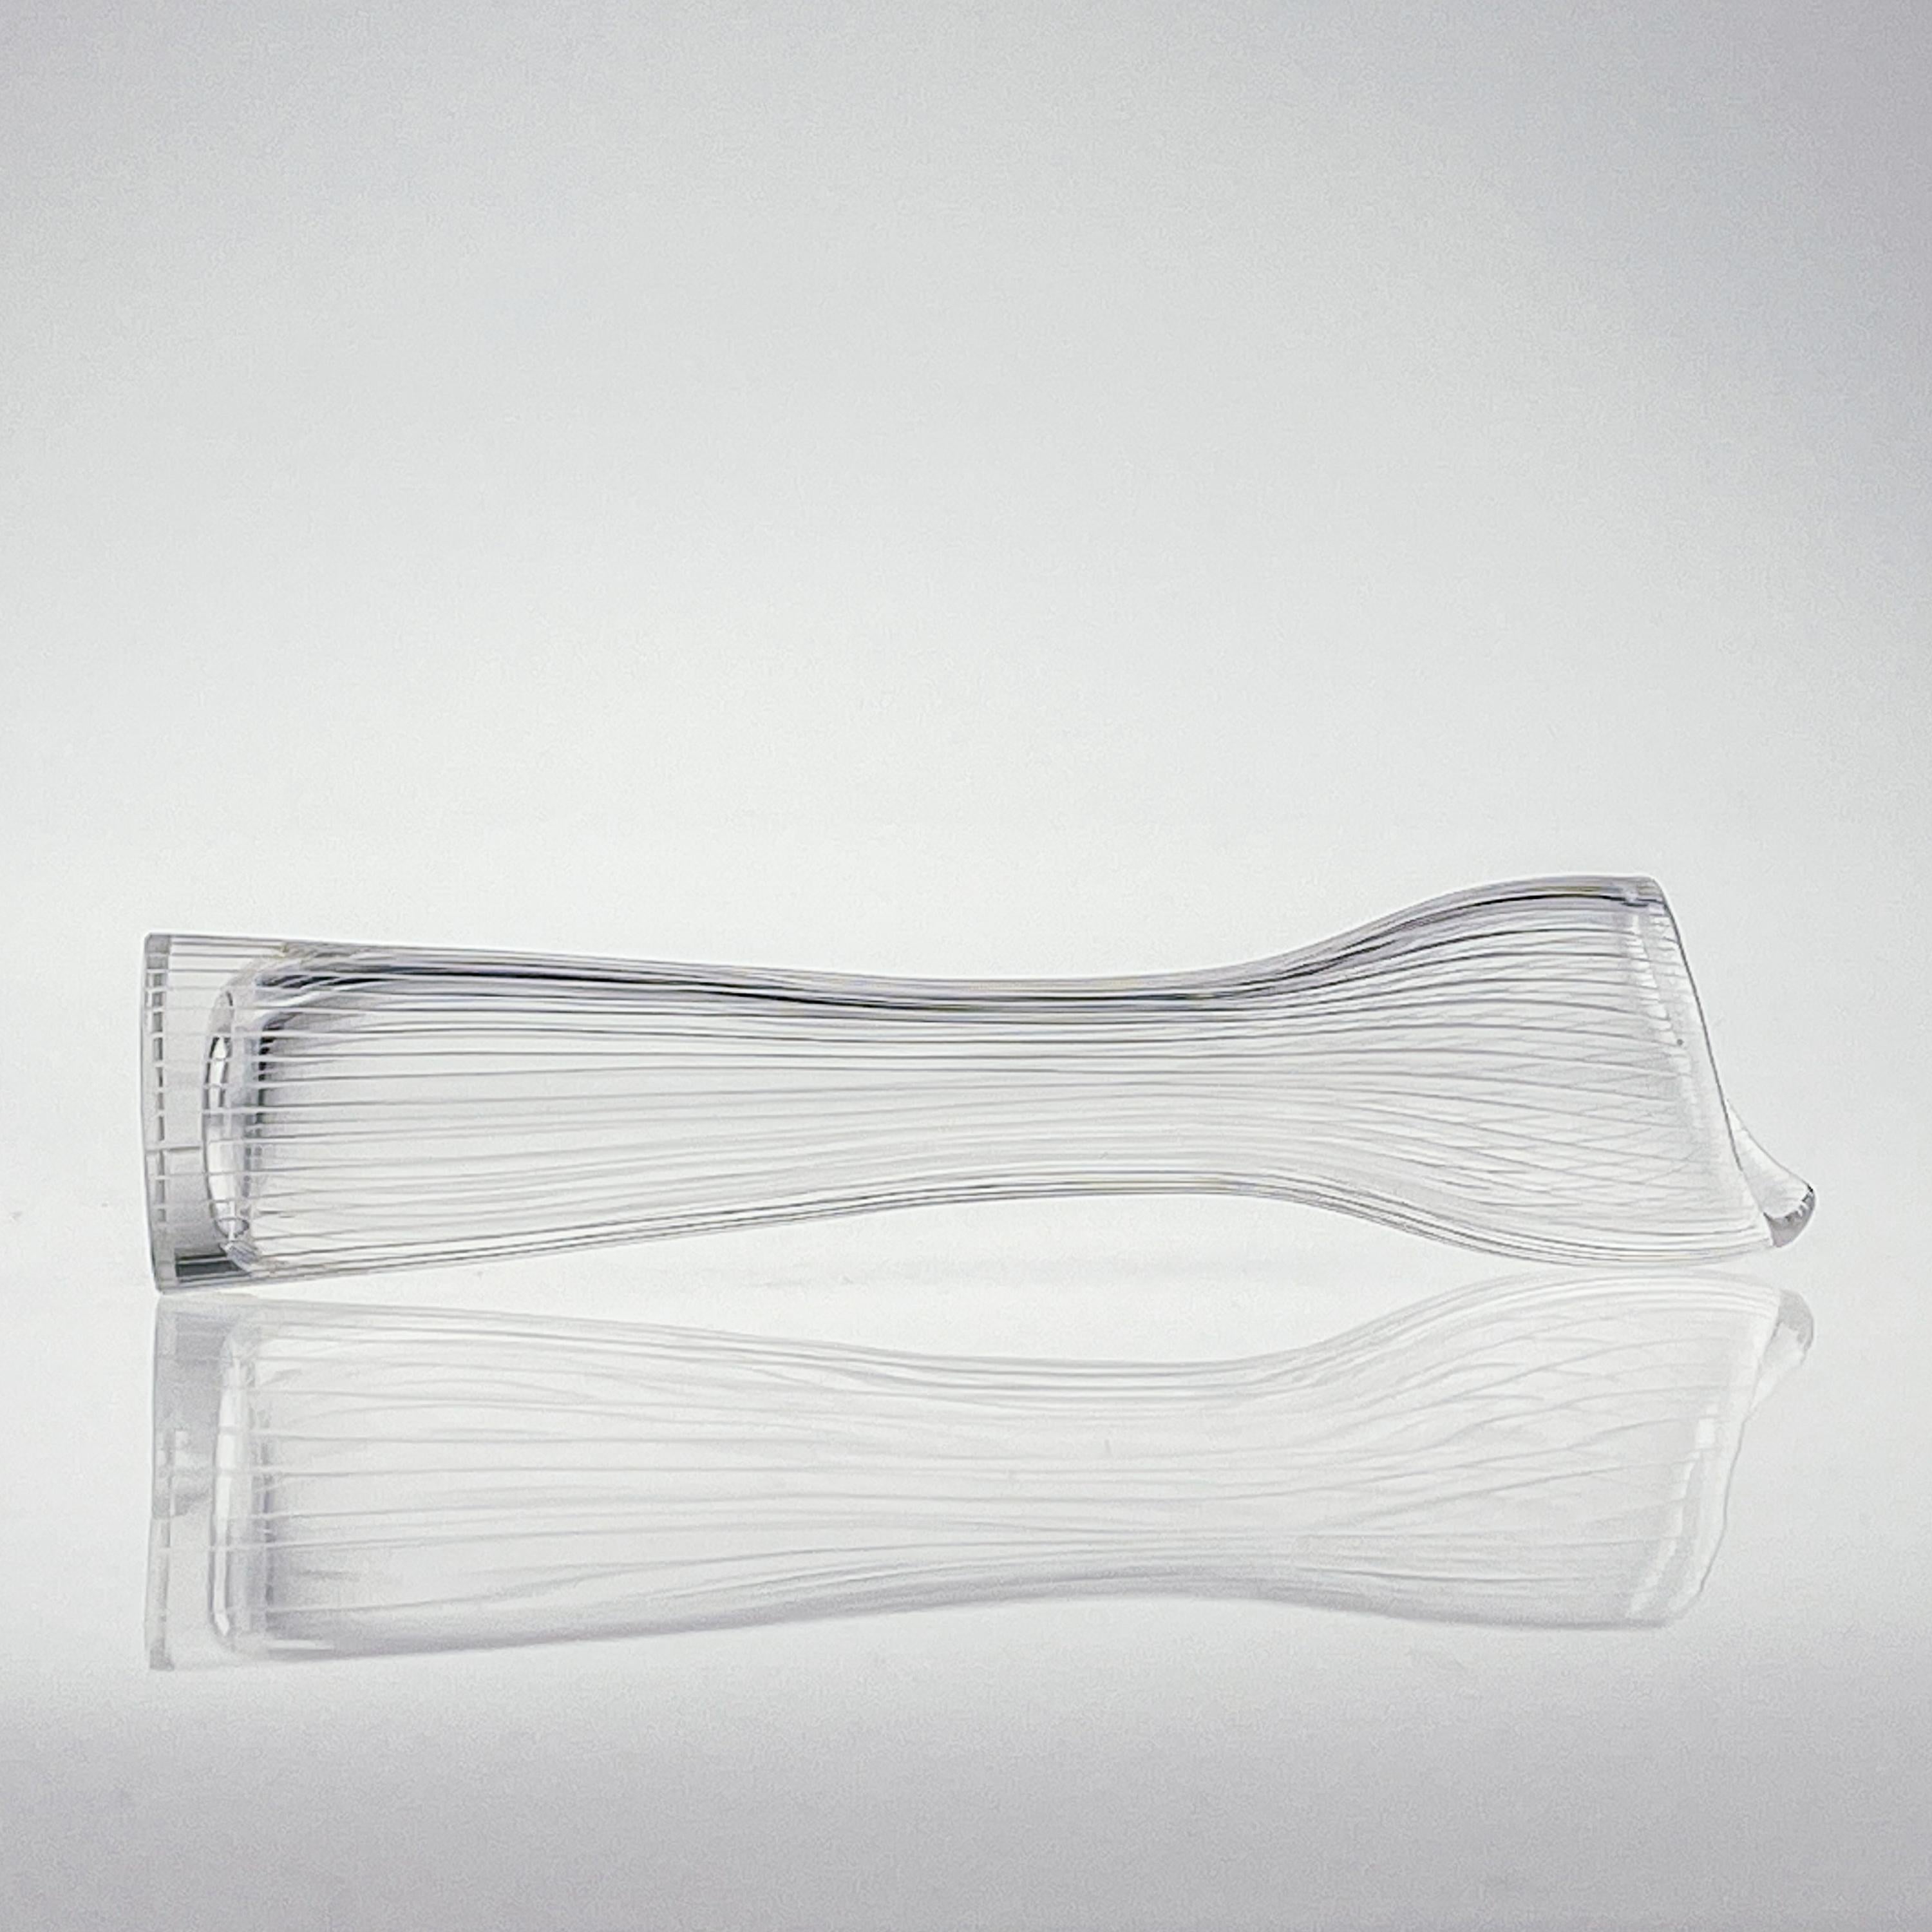 Scsndinavian Modern Tapio Wirkkala Crystal Line Cut Art Vase Handblown 1957 For Sale 3